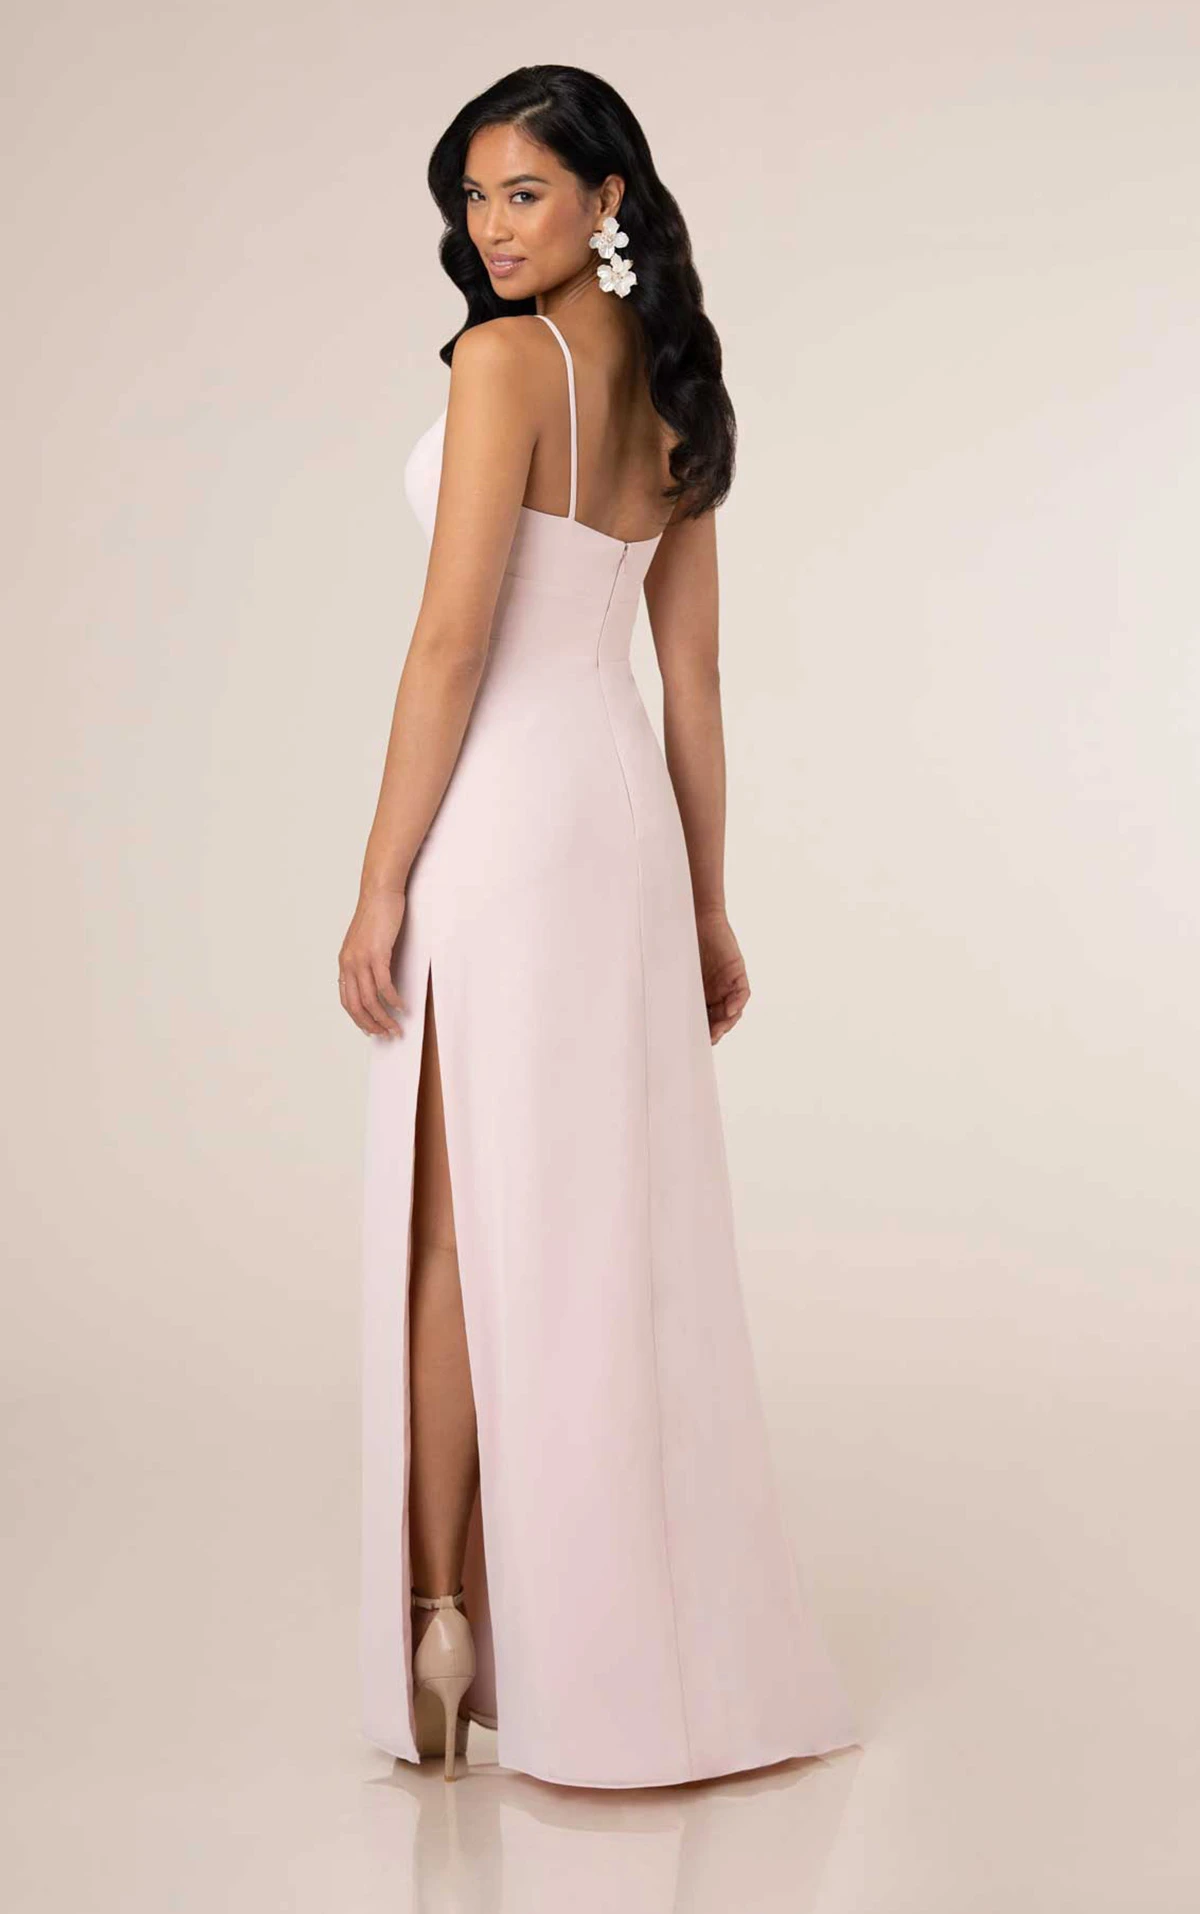 light pink bridesmaid dress with deep v-neckline - 9788 by Sorella Vita